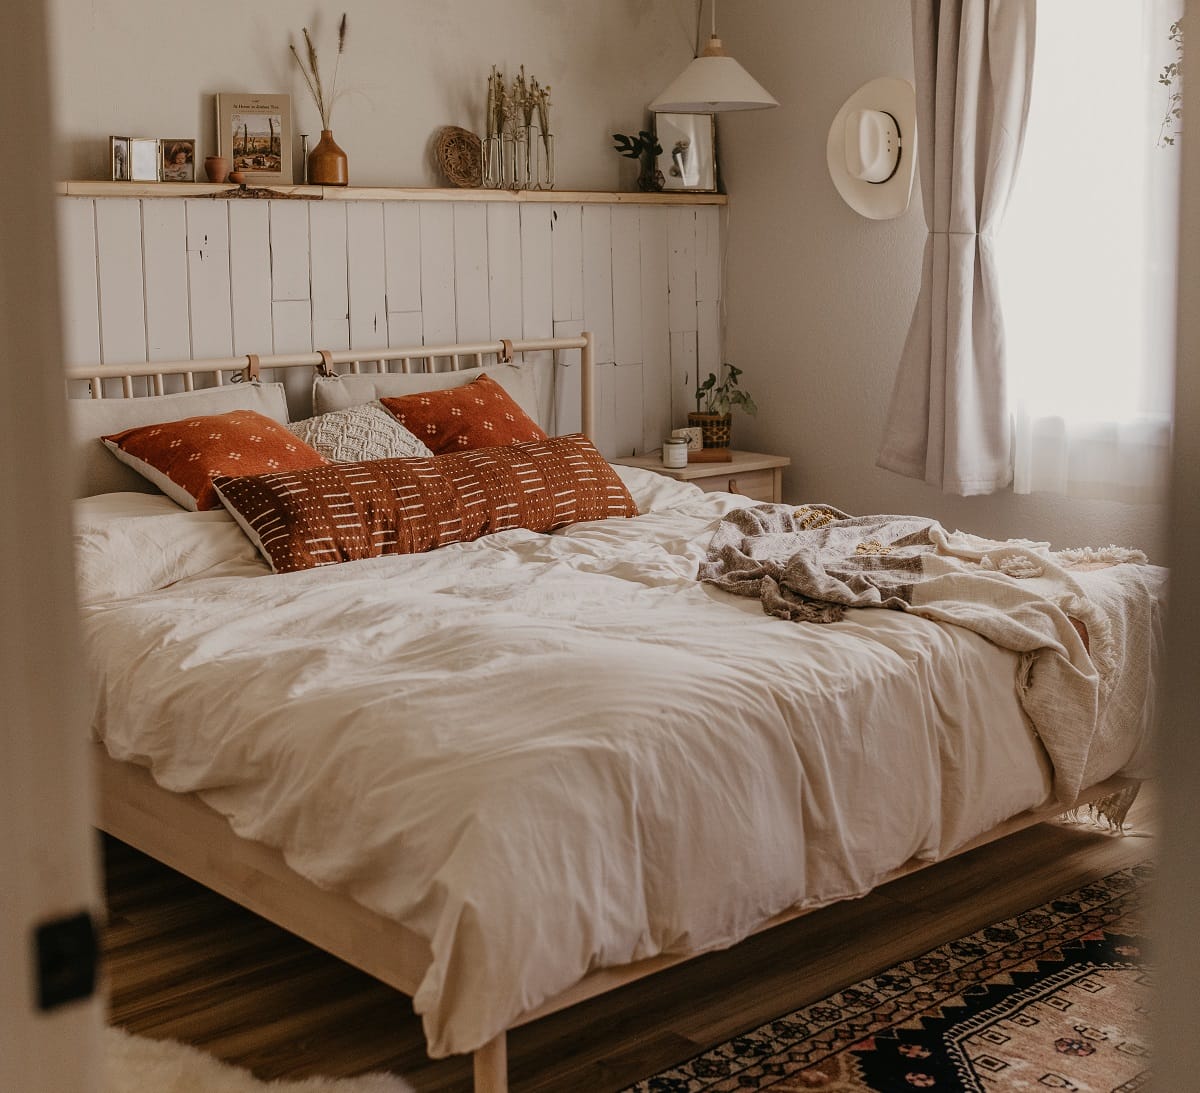 Wabi sabi bedroom interior design style